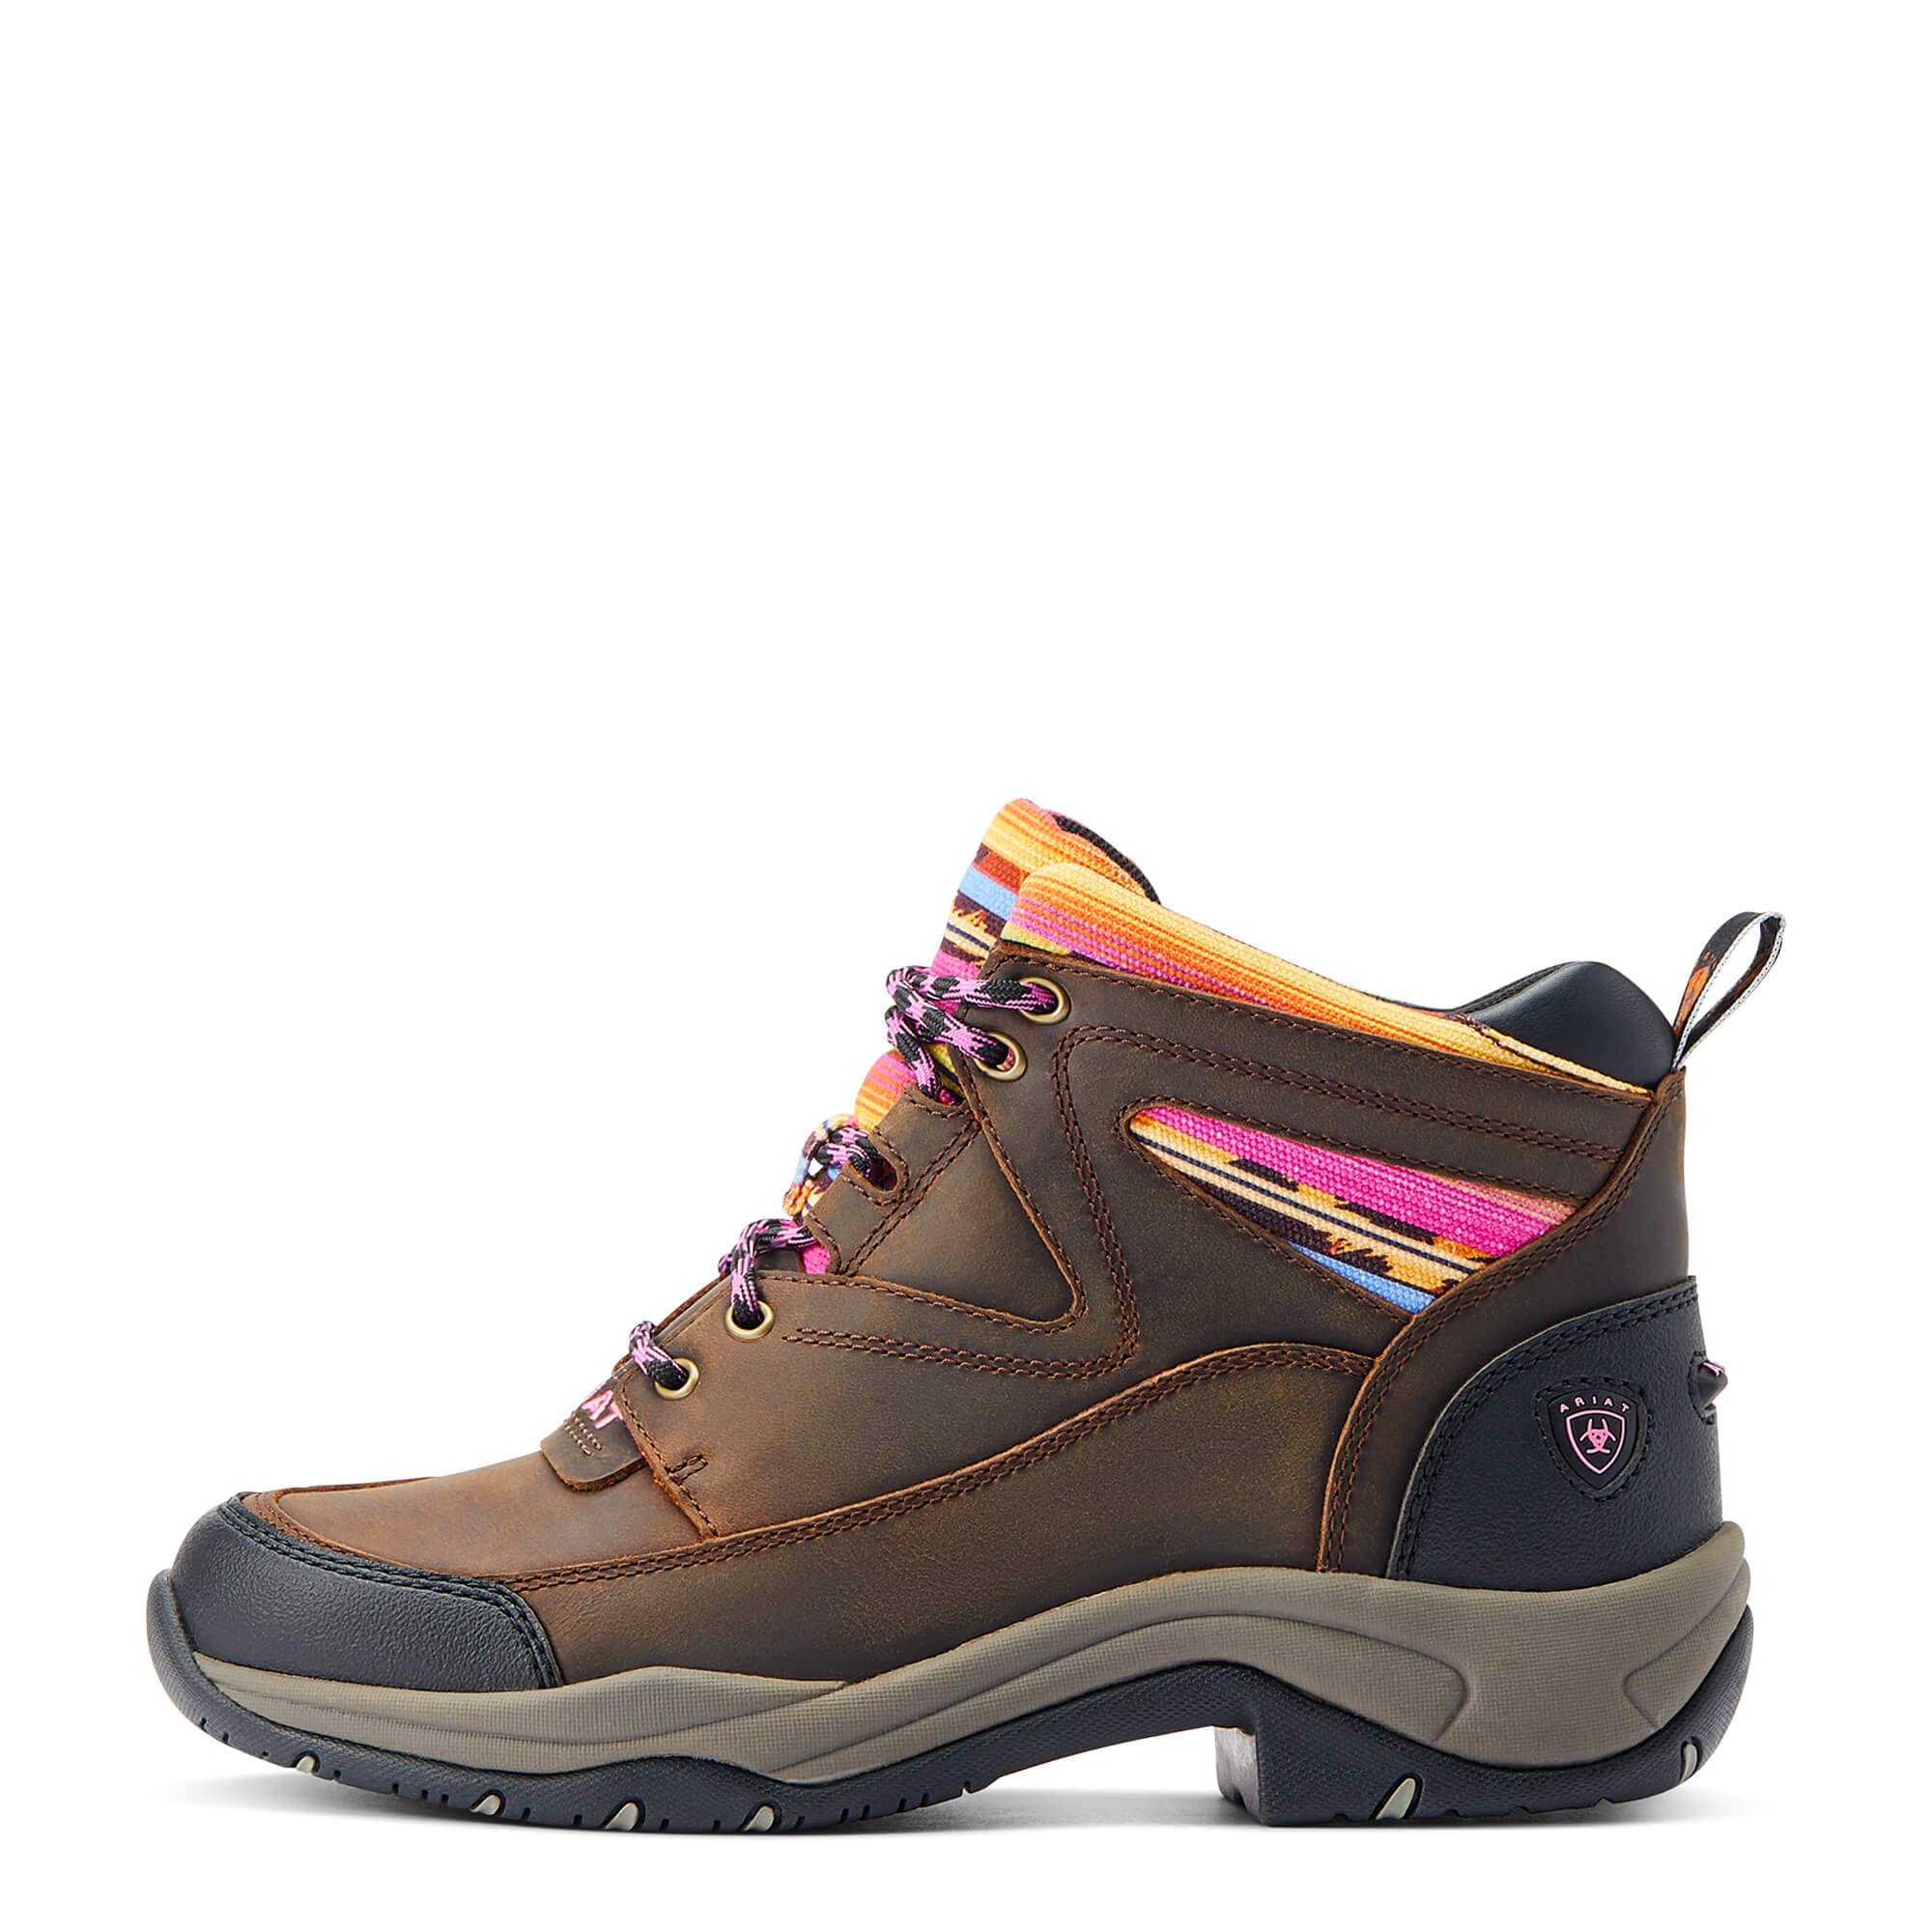 Ariat Women's Terrain Boot Hiking